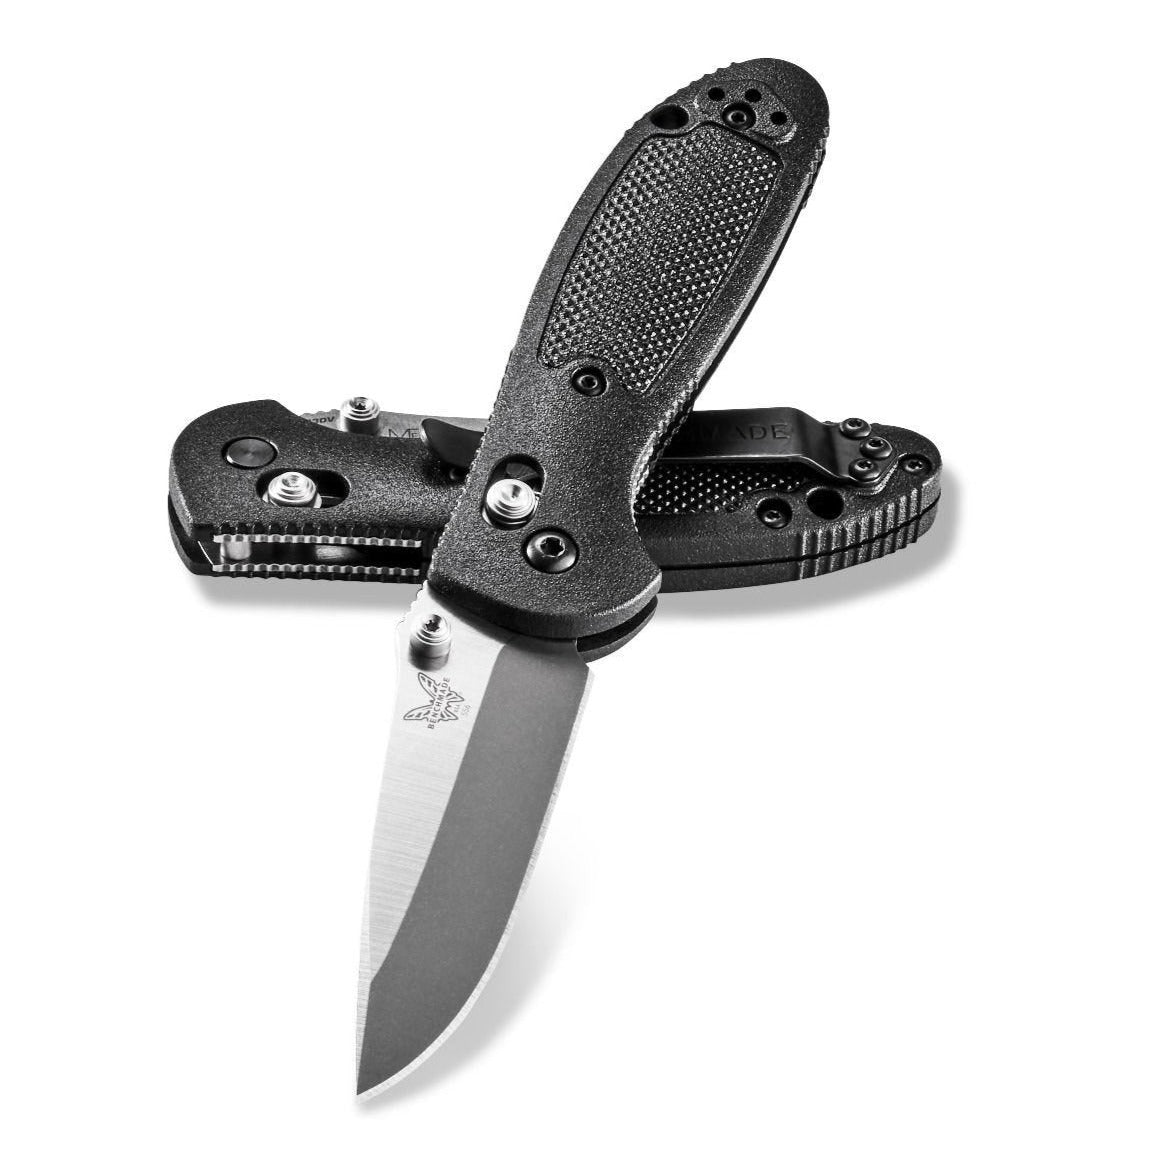 Benchmade Mini-Griptilian Knife-Knives & Tools-556-S30V-Kevin's Fine Outdoor Gear & Apparel